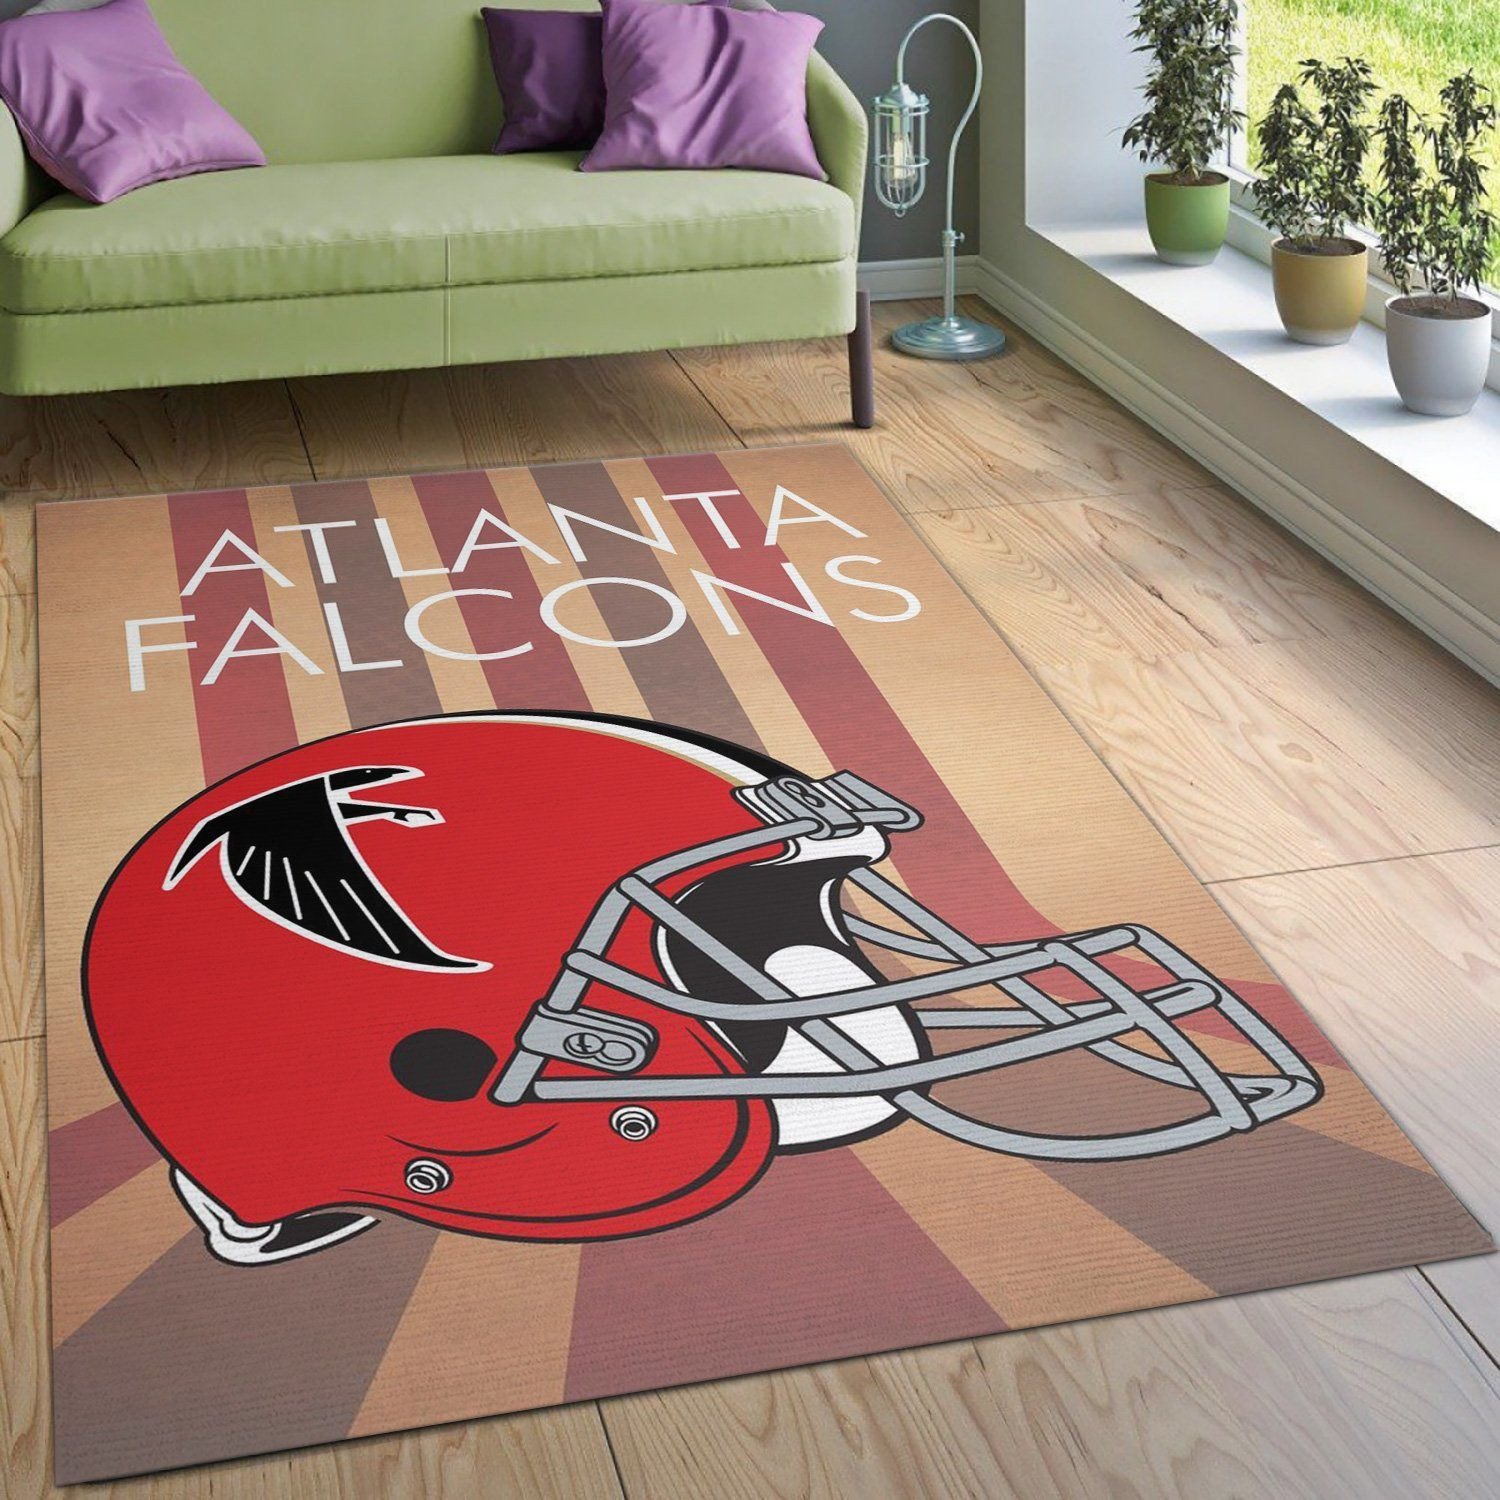 Atlanta Falcons Retro Nfl Area Rug Living Room Rug Home US Decor - Indoor Outdoor Rugs 3